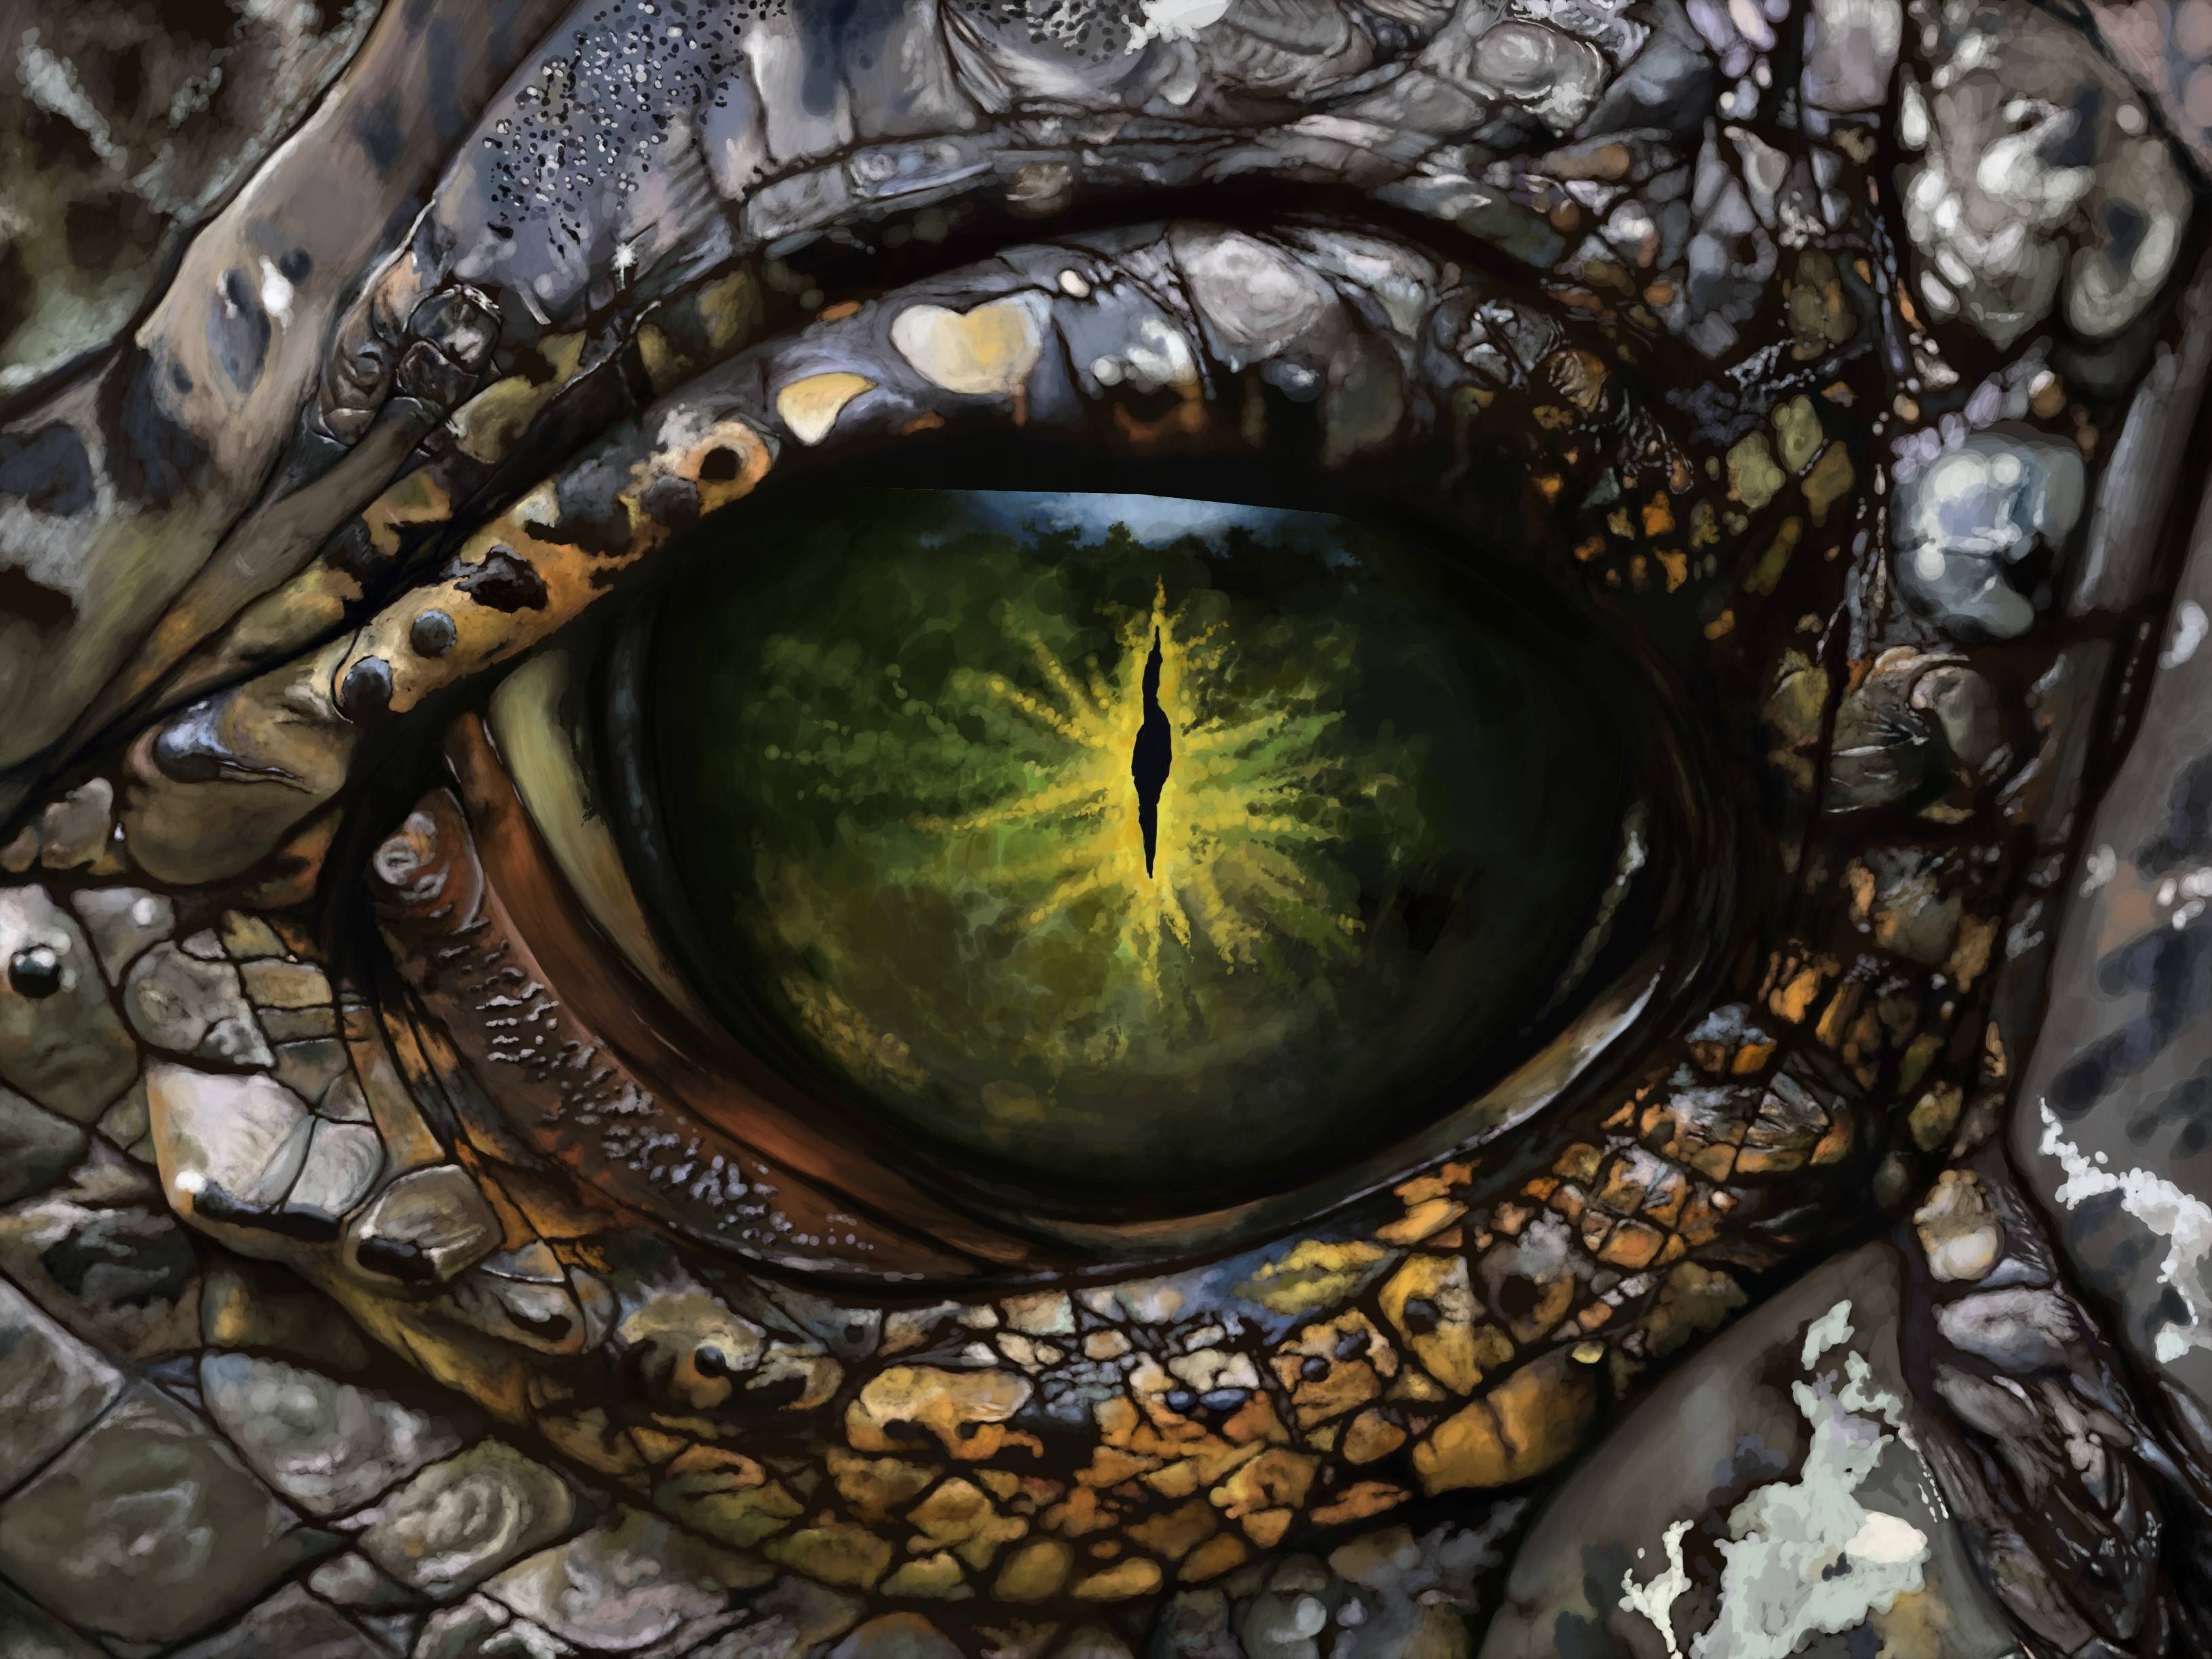 crocodile eyes - Google Search | Eyes | Pinterest | Crocodile eyes